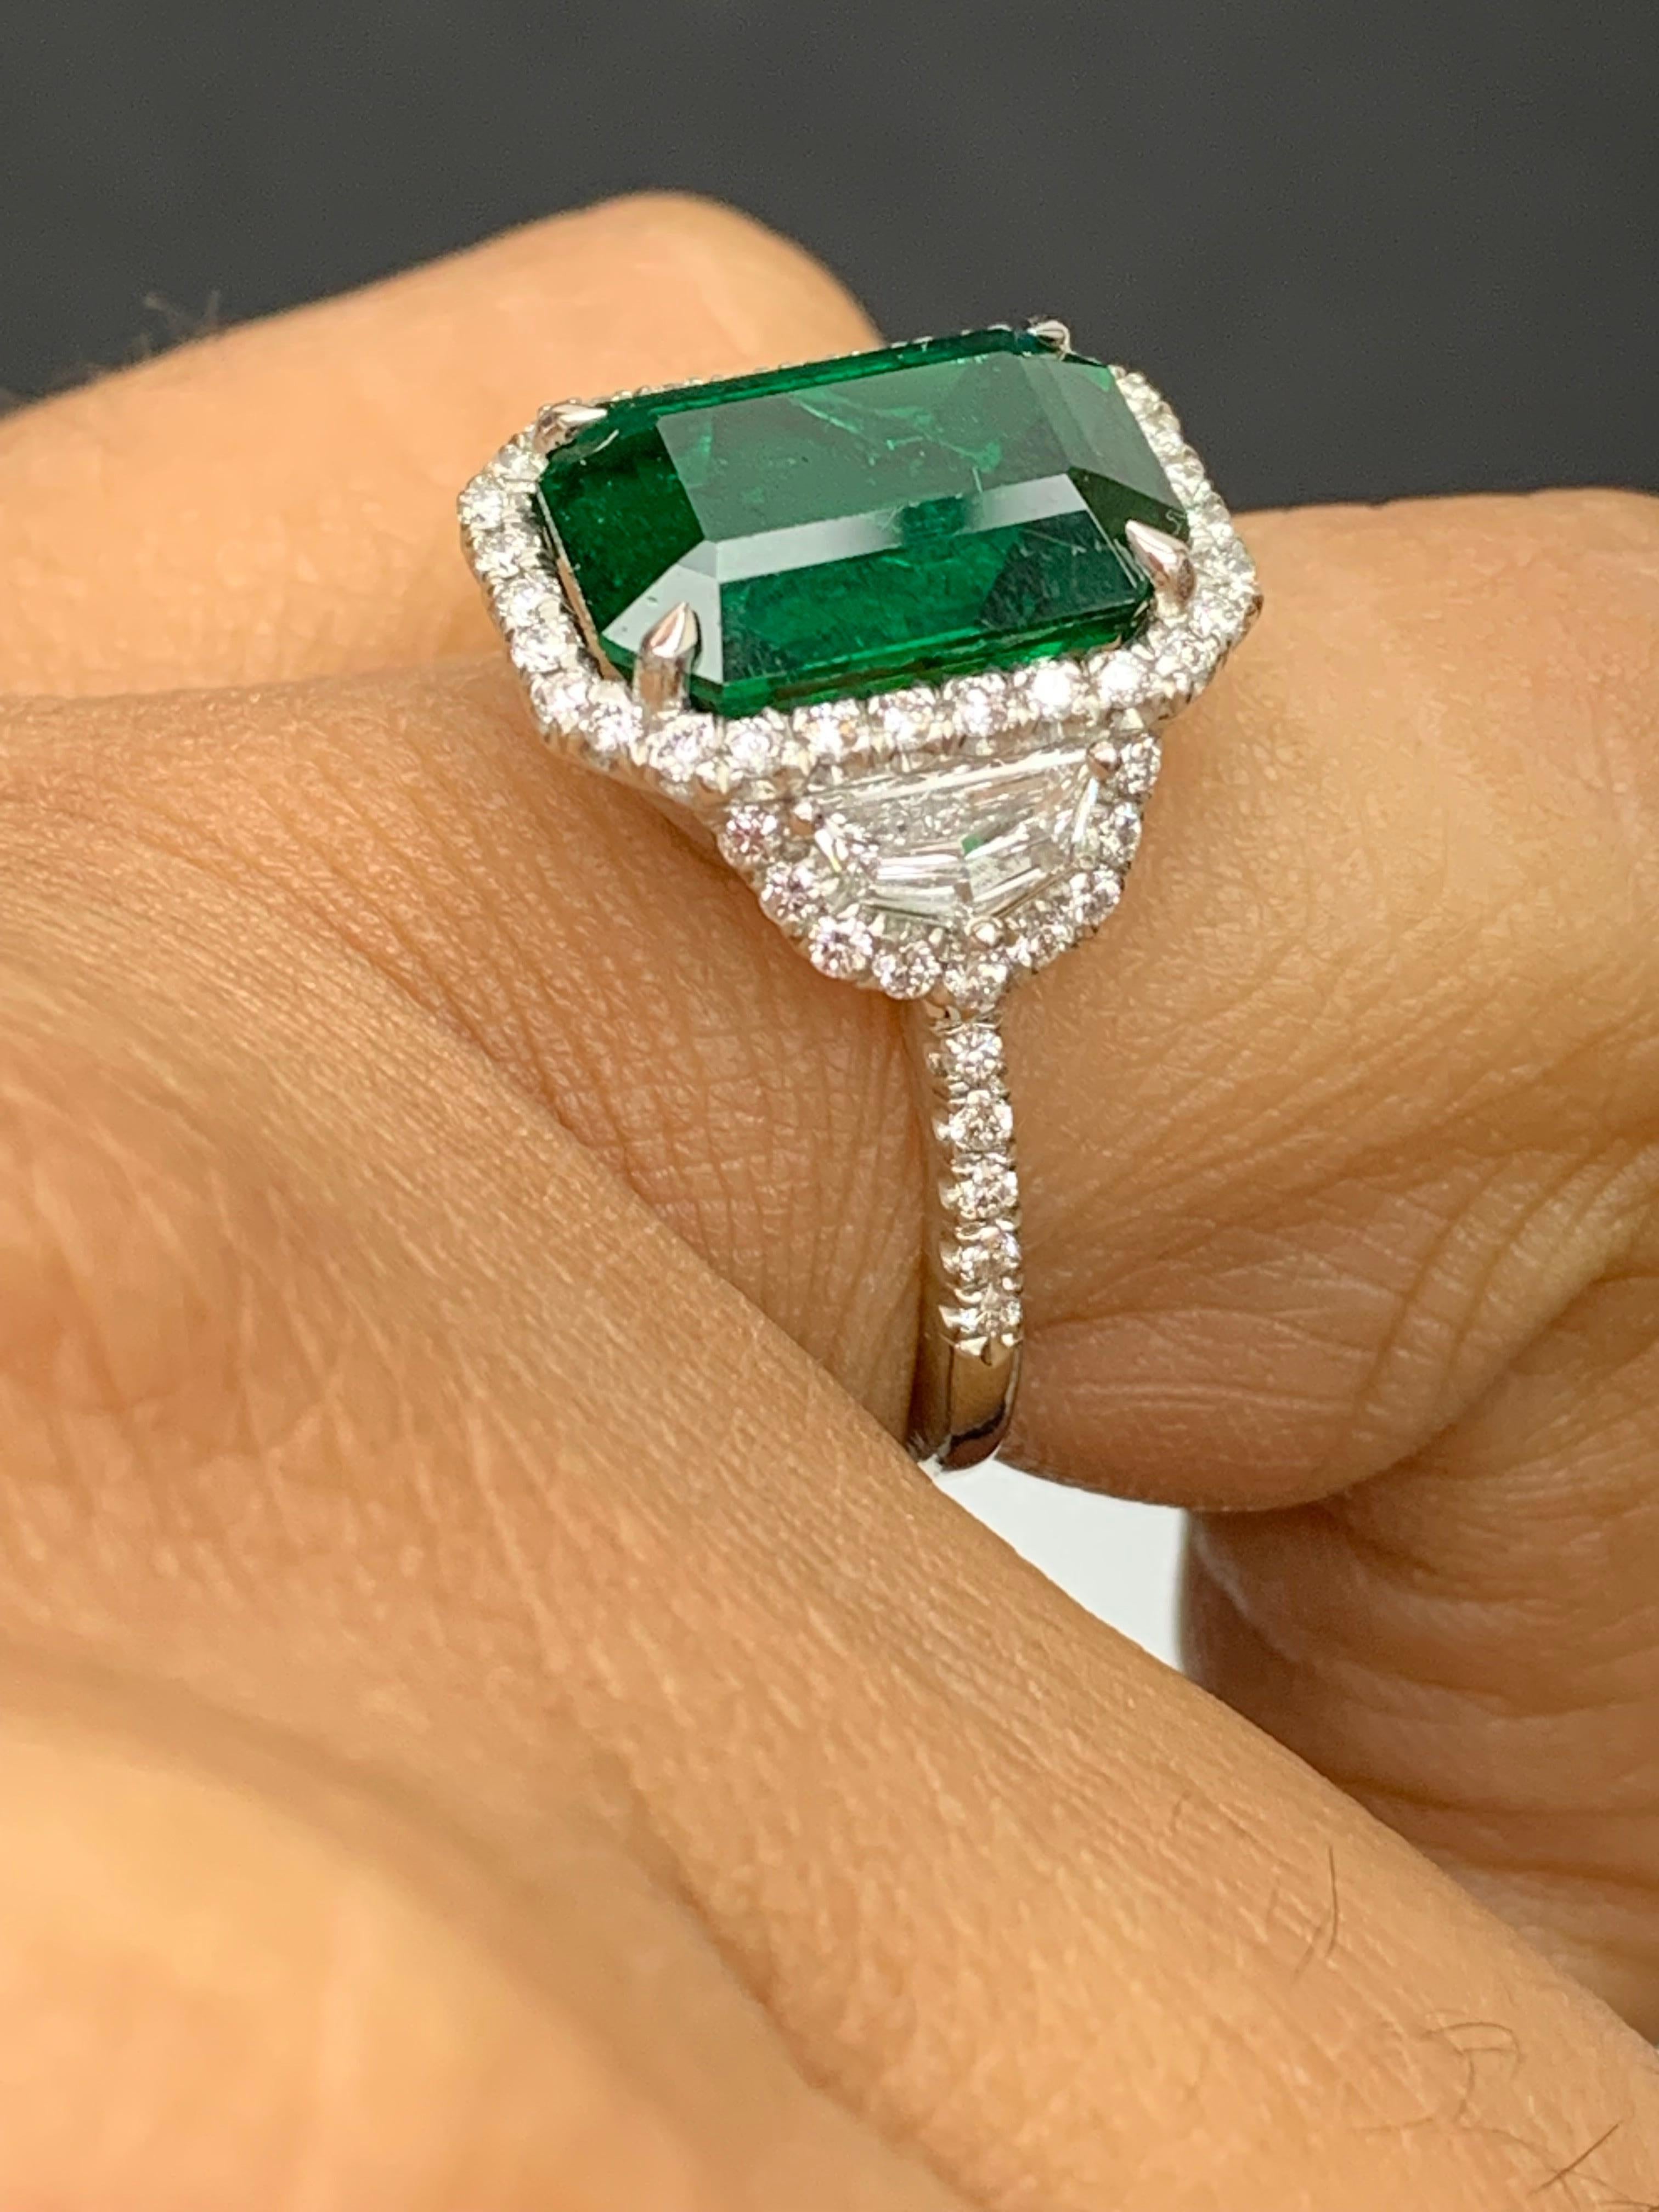 GIA Certified 4.07 Carat Emerald Cut Emerald Diamond 3 Stone Ring in Platinum For Sale 1